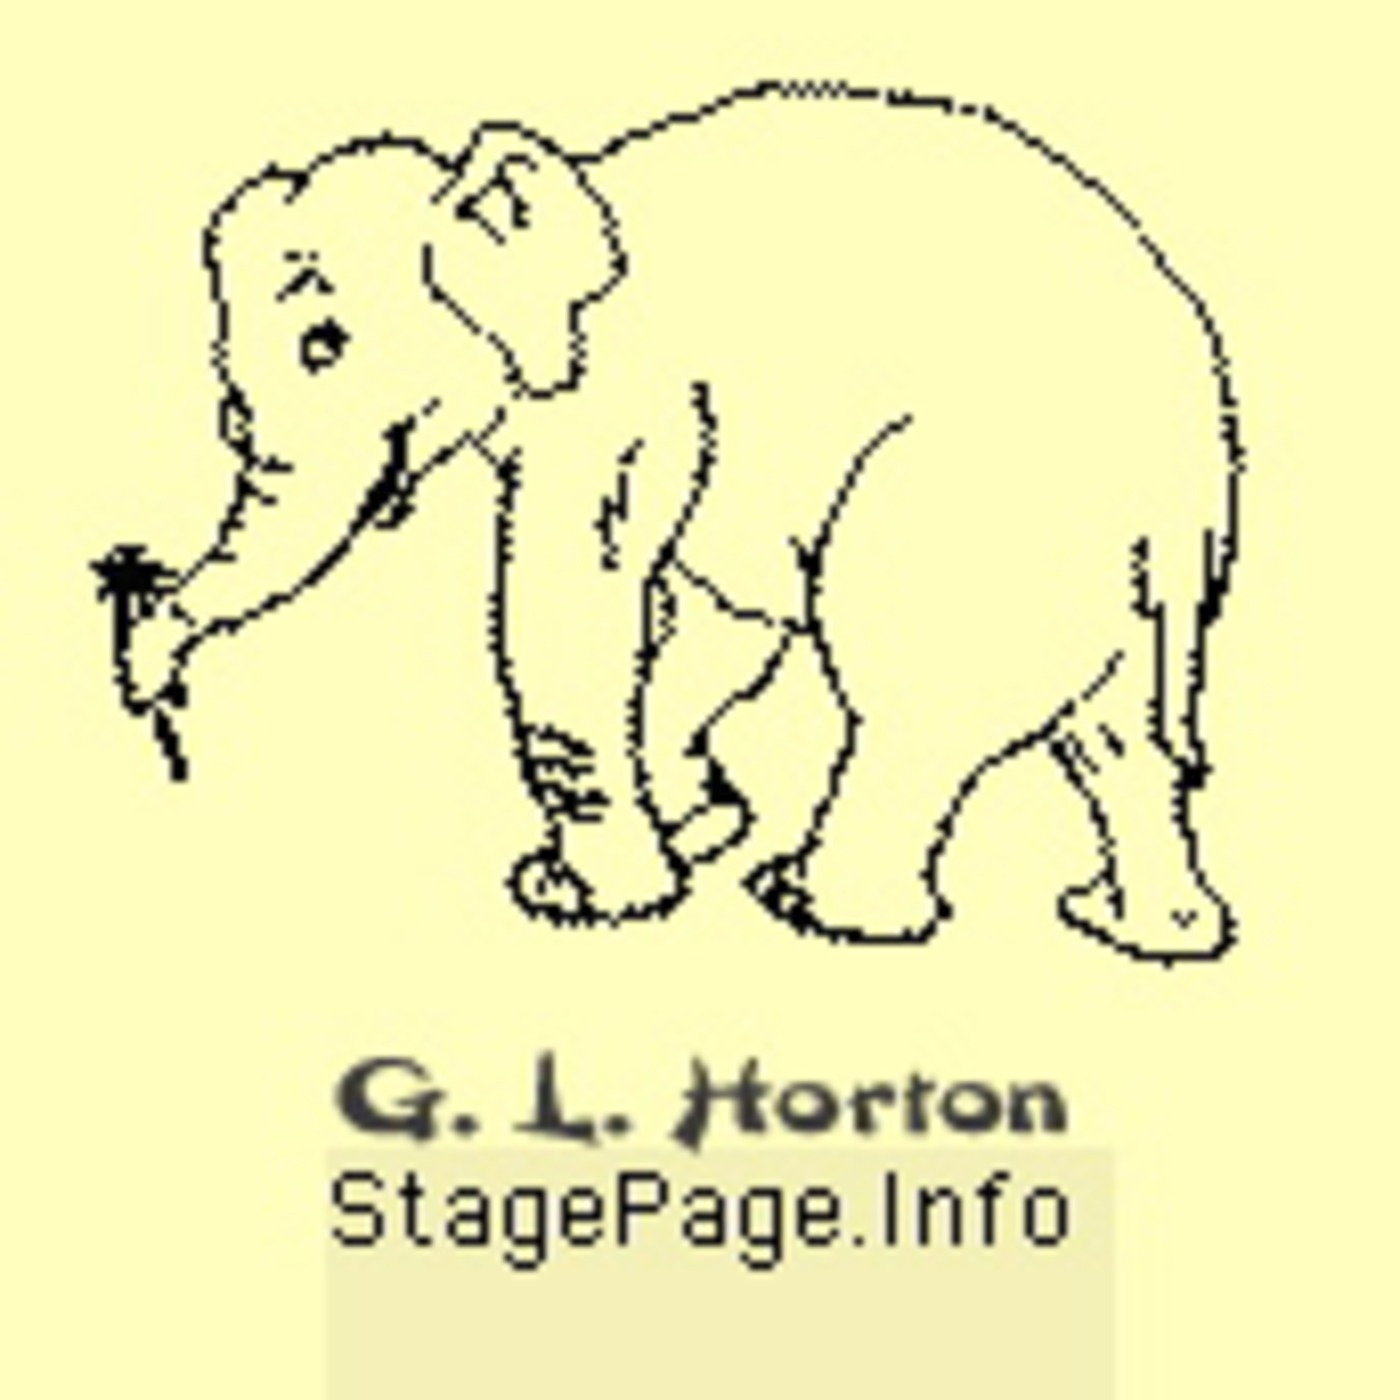 G.L.Horton's Stage Page